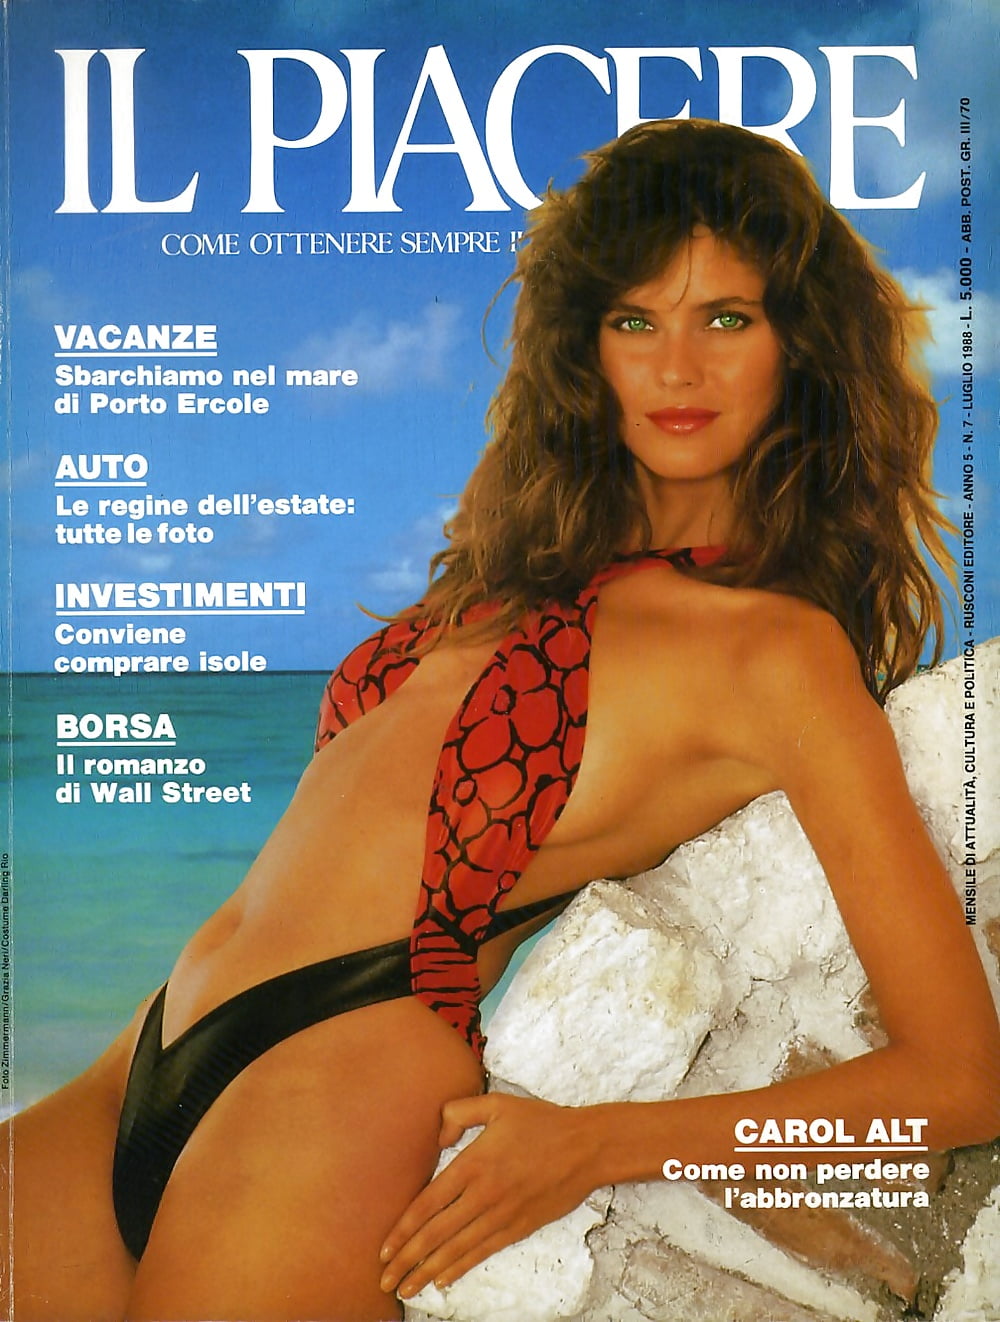 Carol Alt Porn - See and Save As carol alt piacere magazine porn pict - Xhams.Gesek.Info